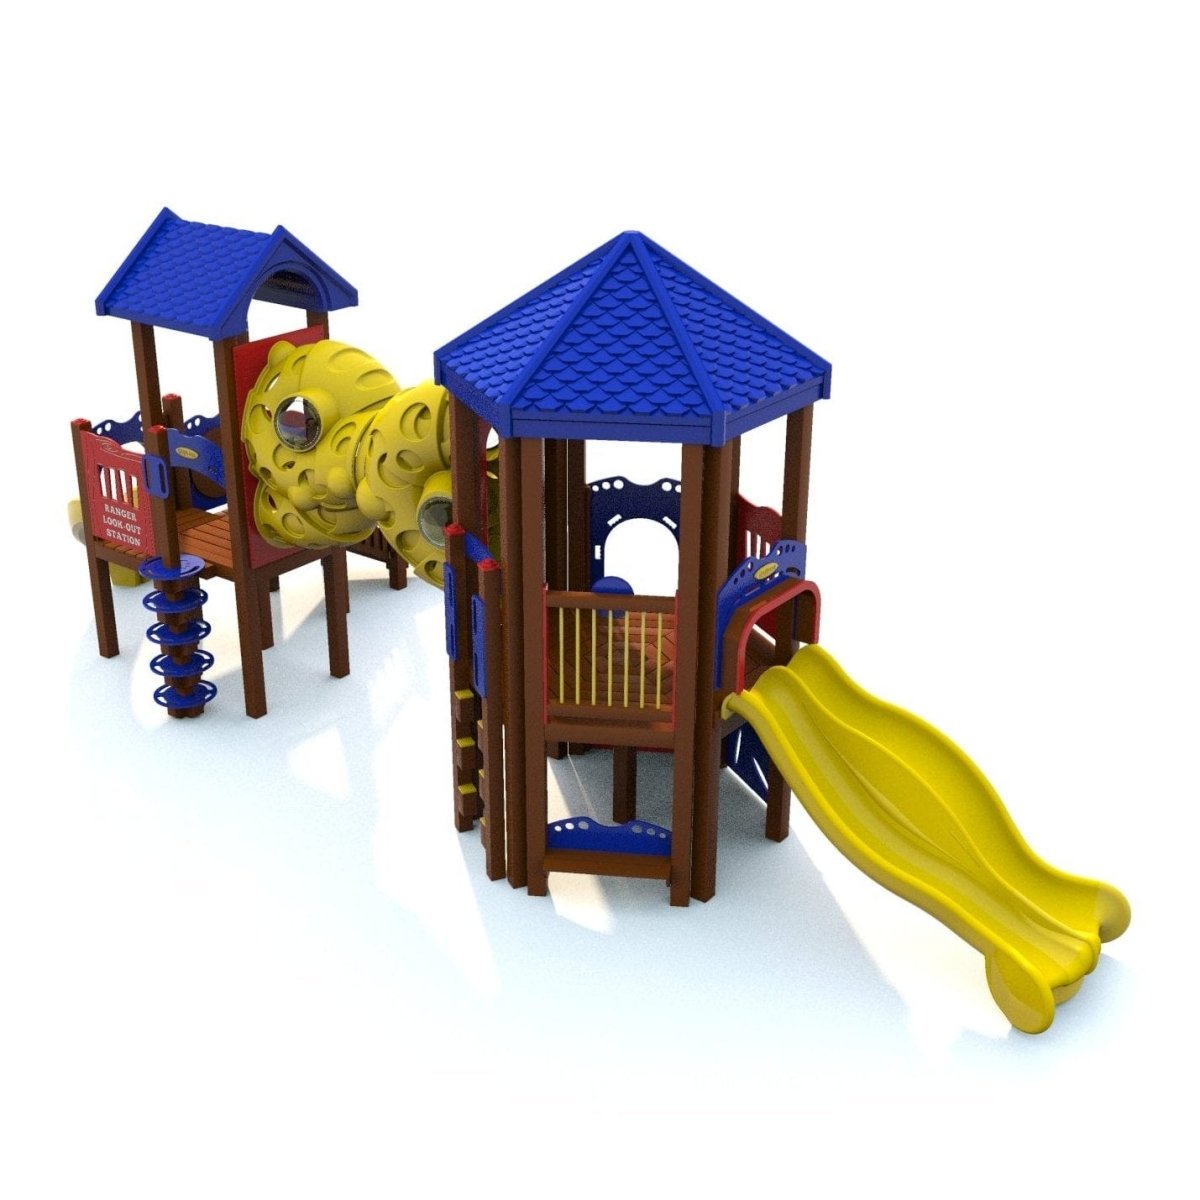 Arcadian Playset - School-Age Playgrounds - Playtopia, Inc.